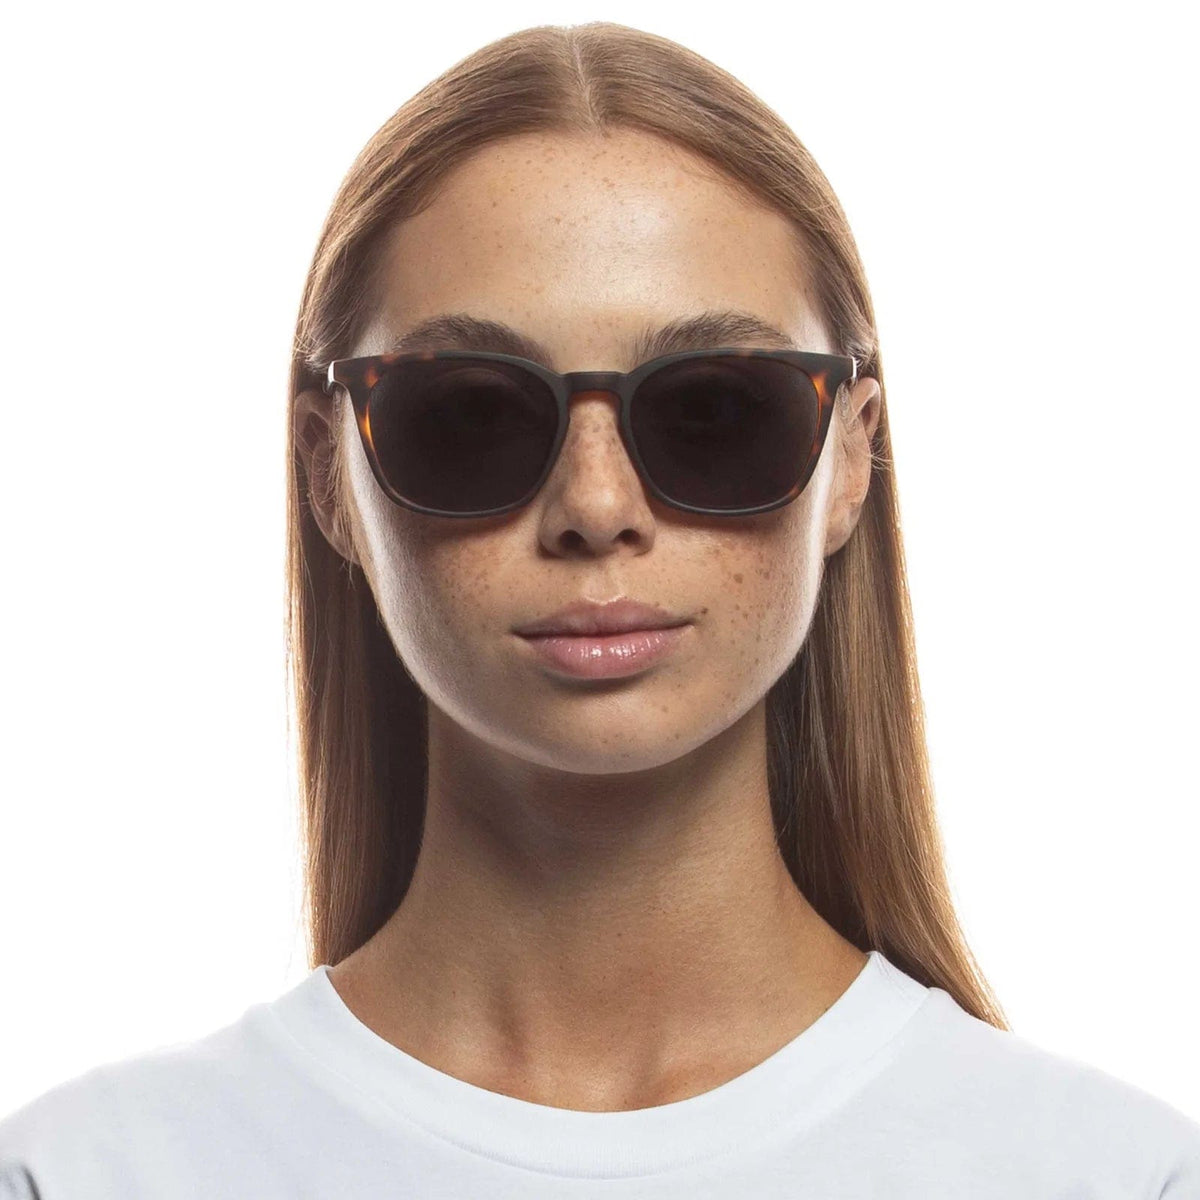 Huzzah Sunnies - Le Specs - Splash Swimwear  - le specs, new accessories, Oct22, sunglasses, sunnies - Splash Swimwear 